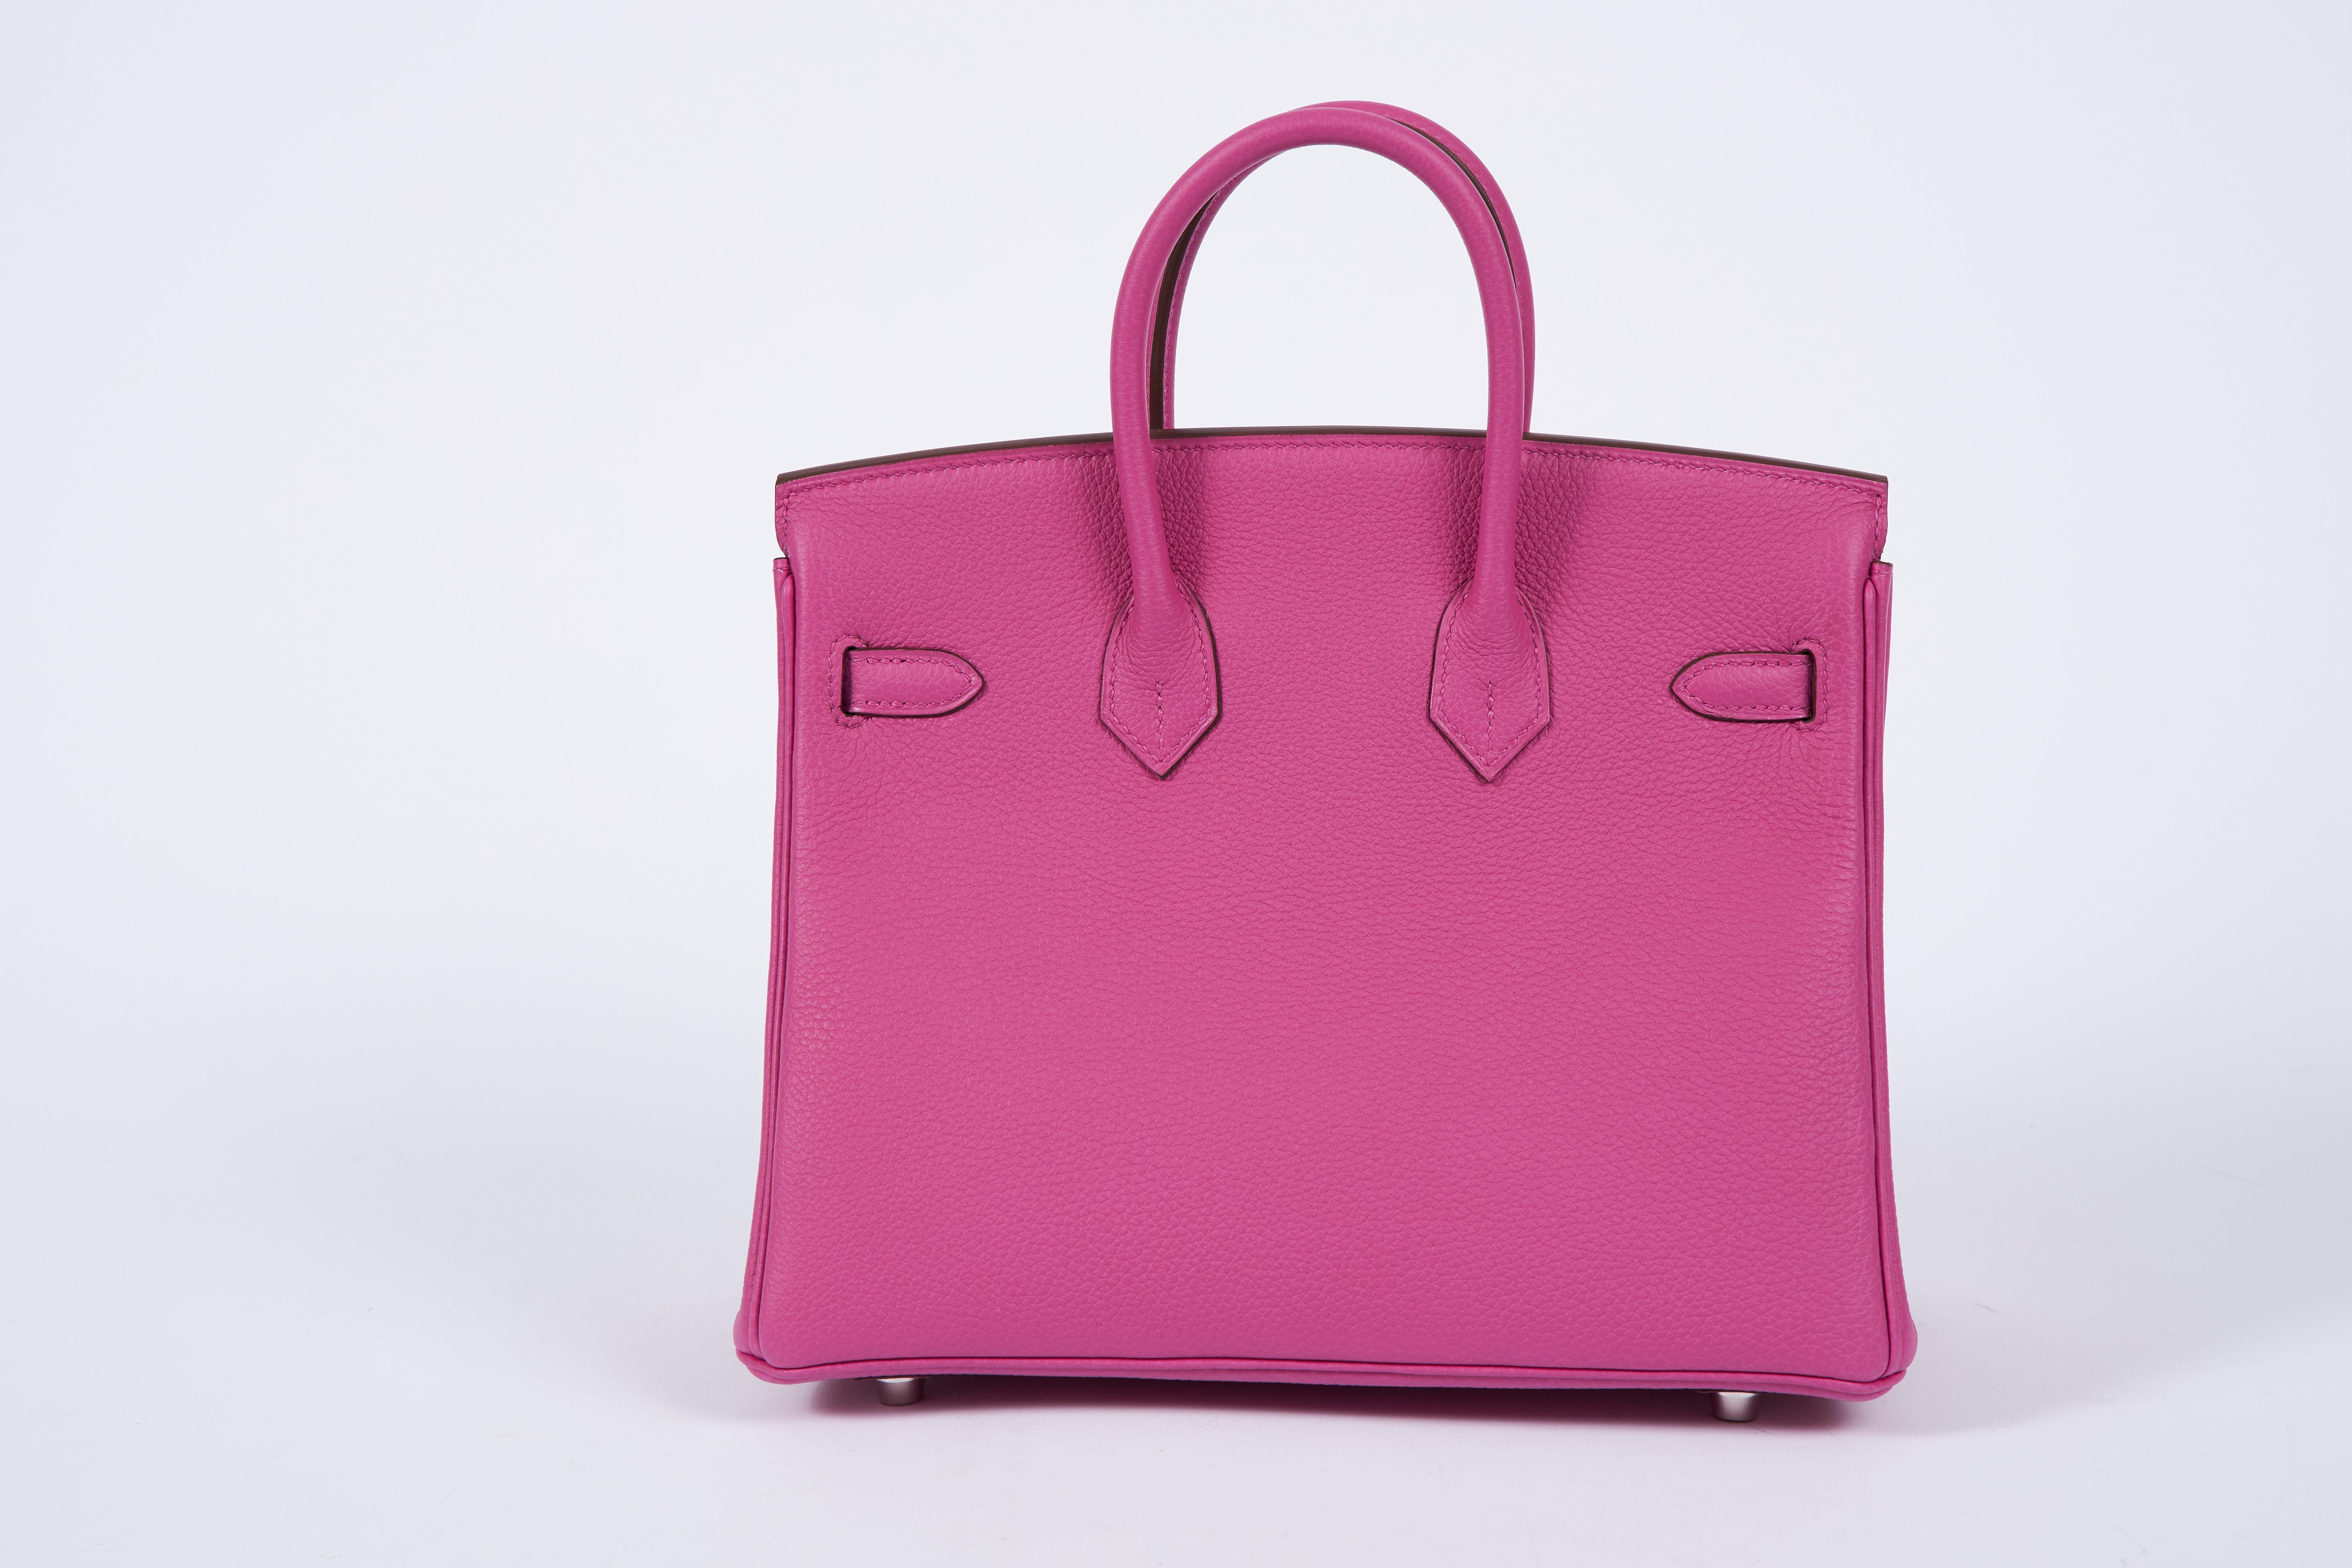 Pink NEW Hermès 25cm Magnolia Togo Birkin in Box